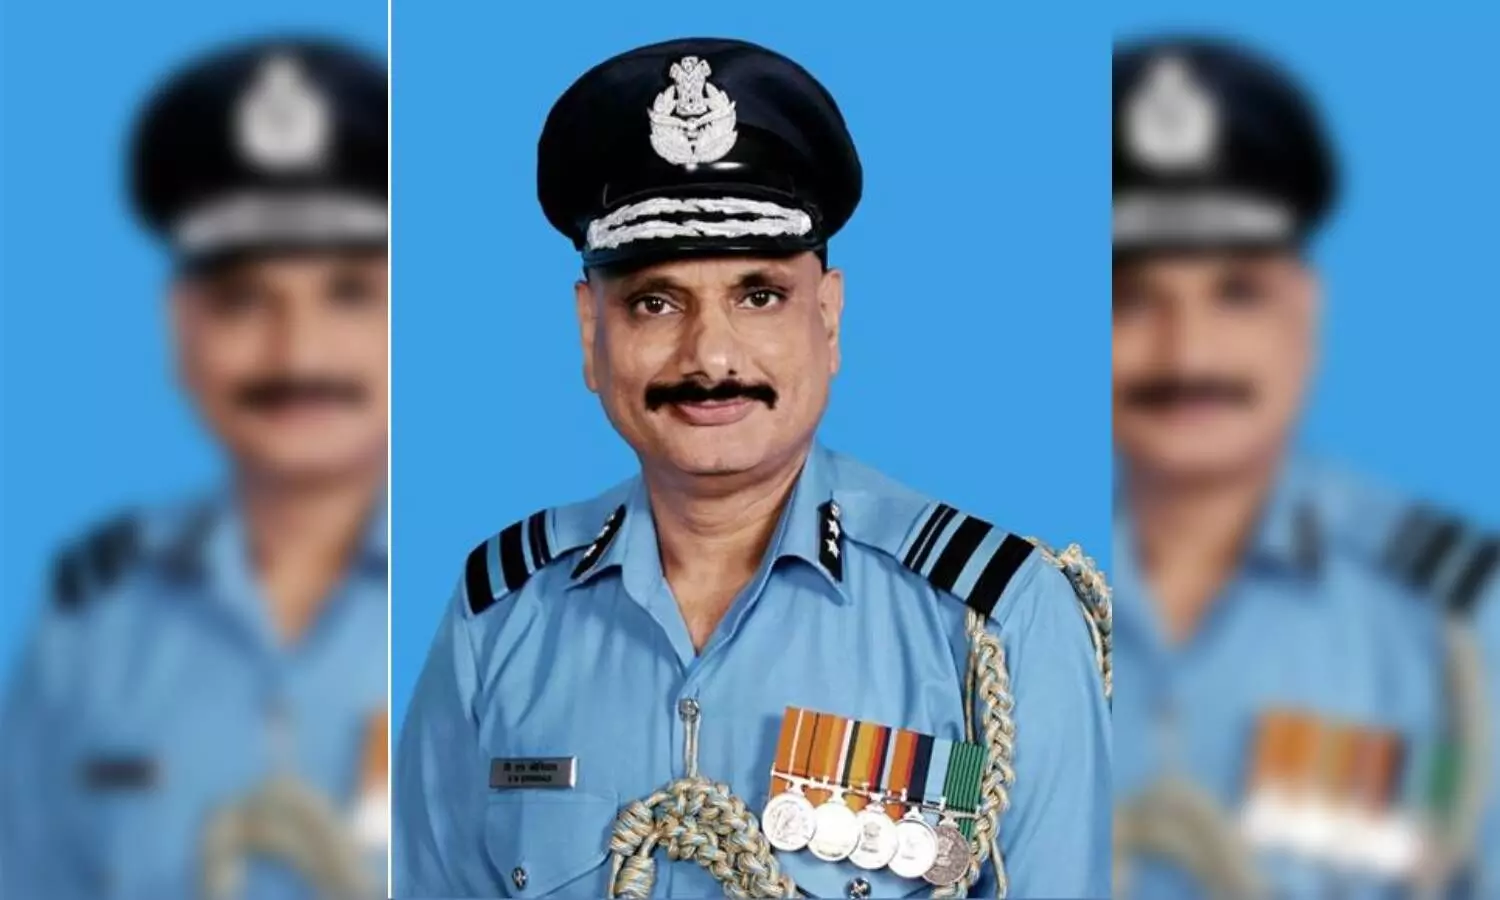 Air Commodore Vishnubhotla Nagaraj Srinivas awarded Vishisht Seva Medal